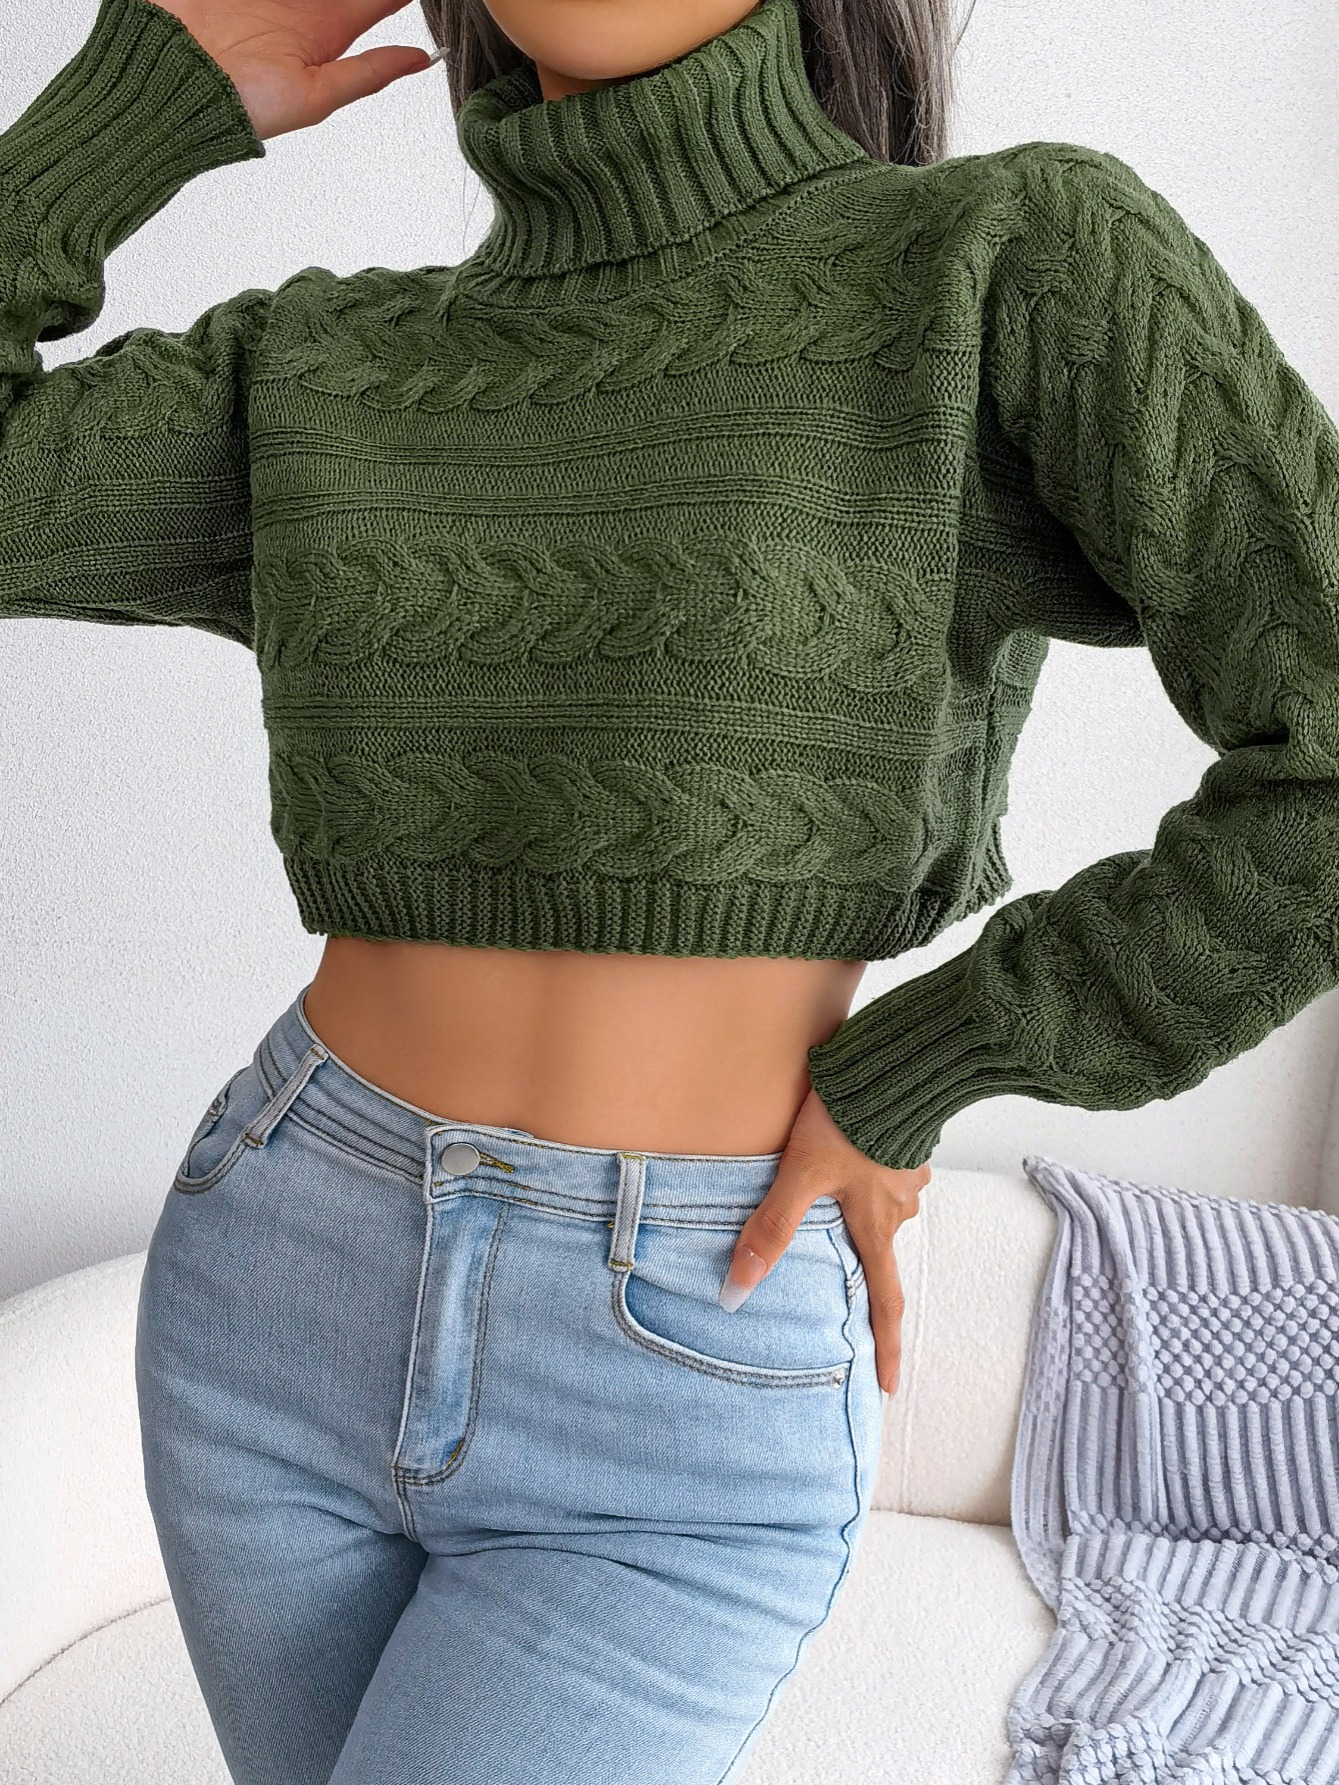 Three toned Color Block Crop Sweater Loose fit Rib knit Crew